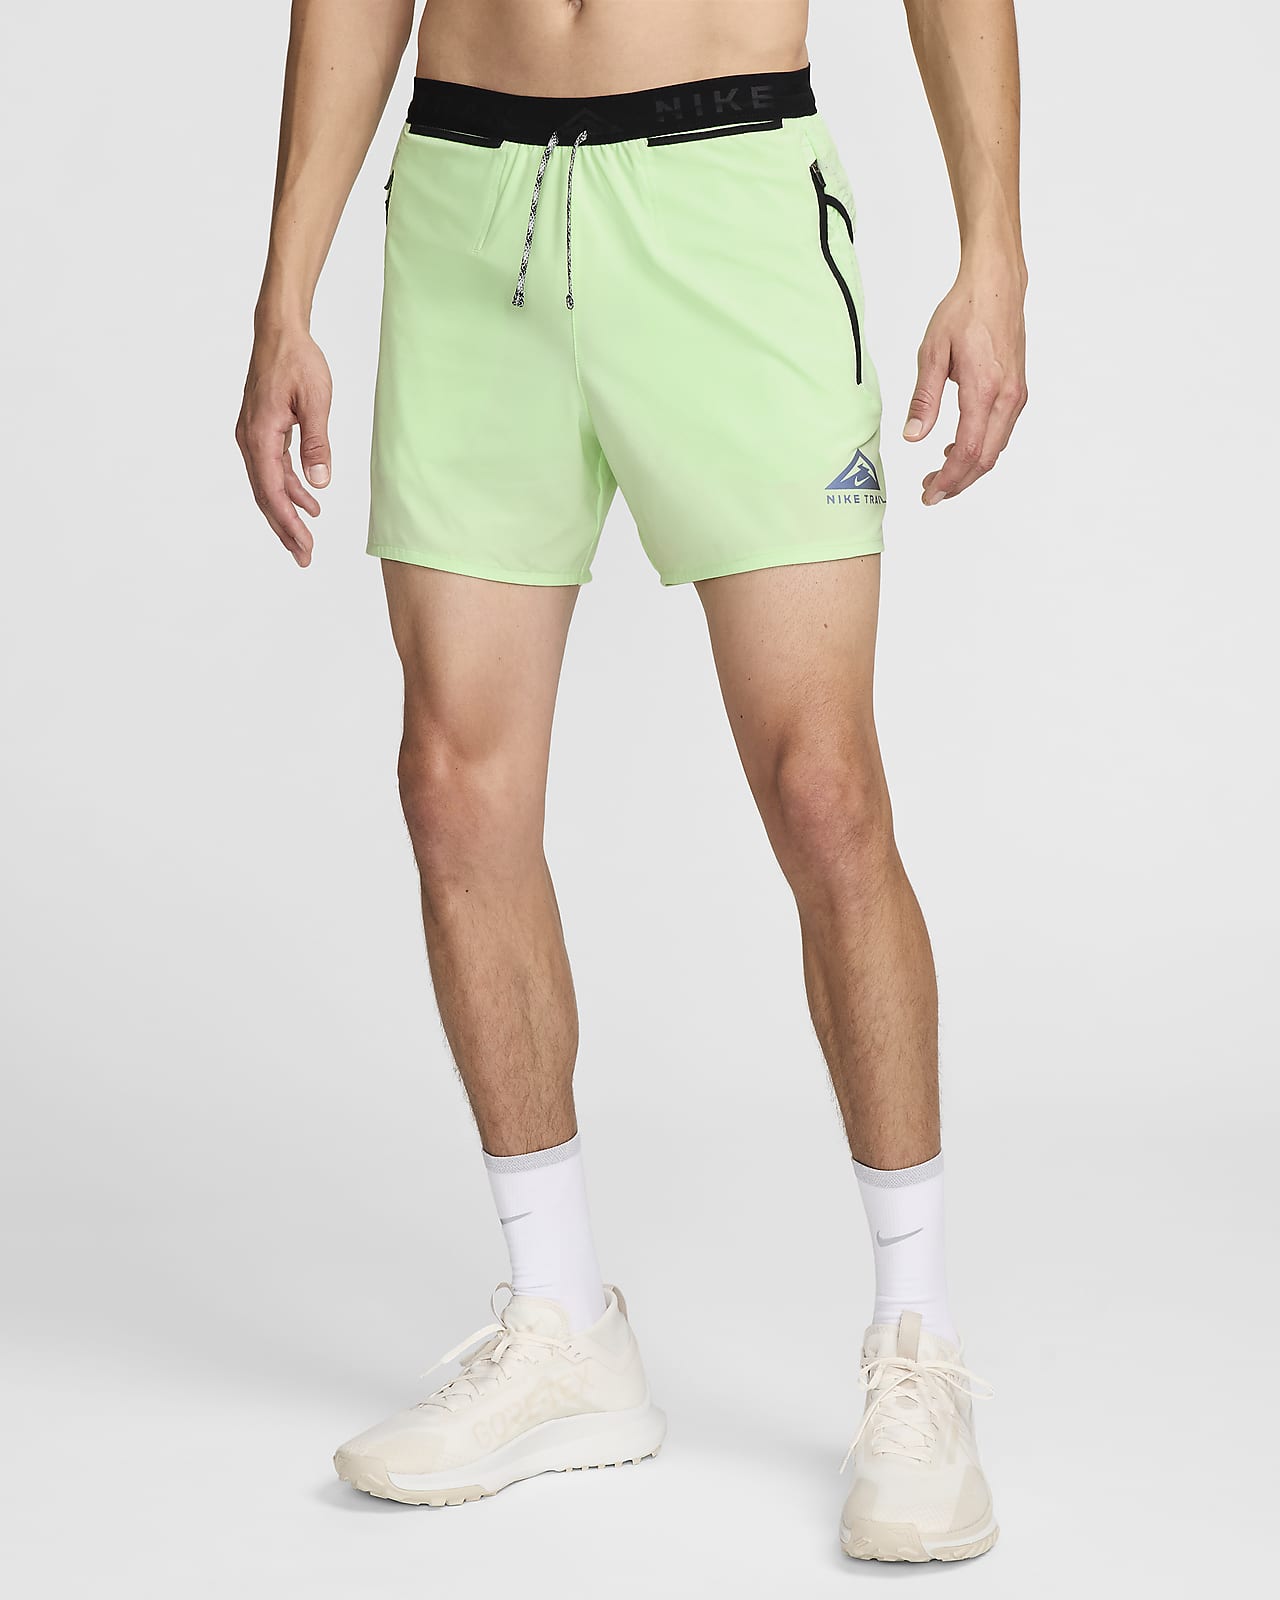 Nike Trail Second Sunrise Dri-FIT 13 cm-es, belső rövidnadrággal bélelt férfi futórövidnadrág